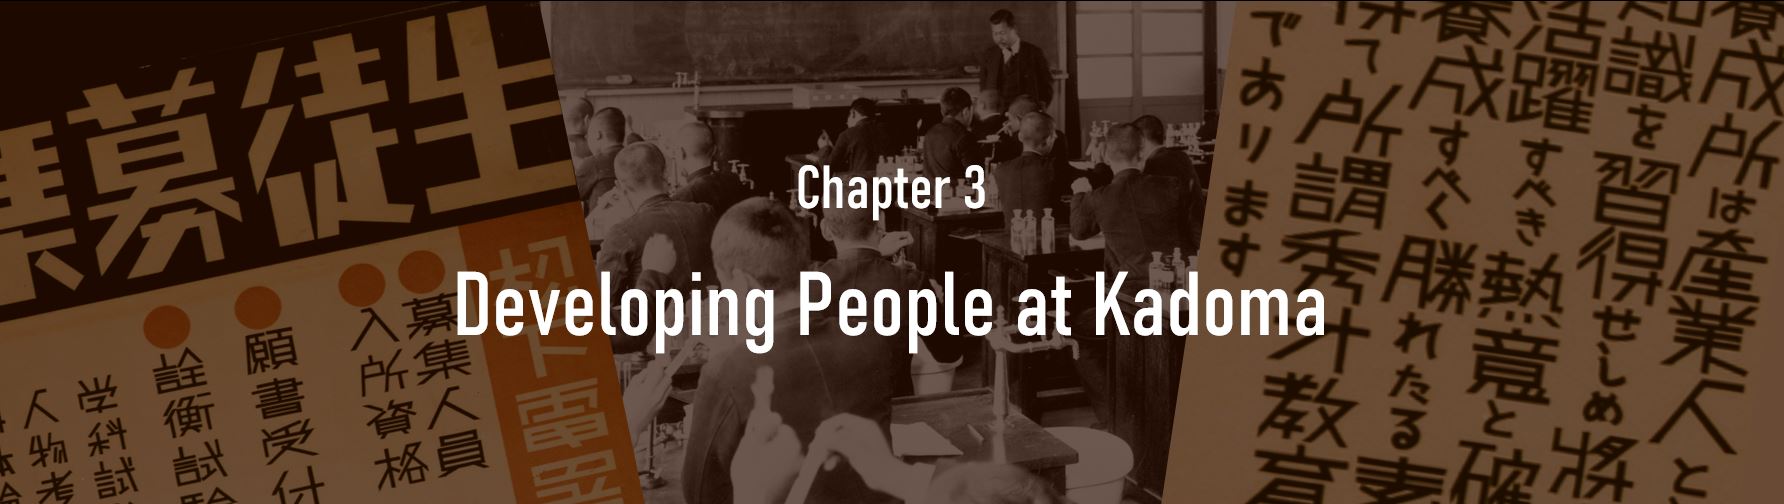 Chapter 3. Developing People at Kadoma